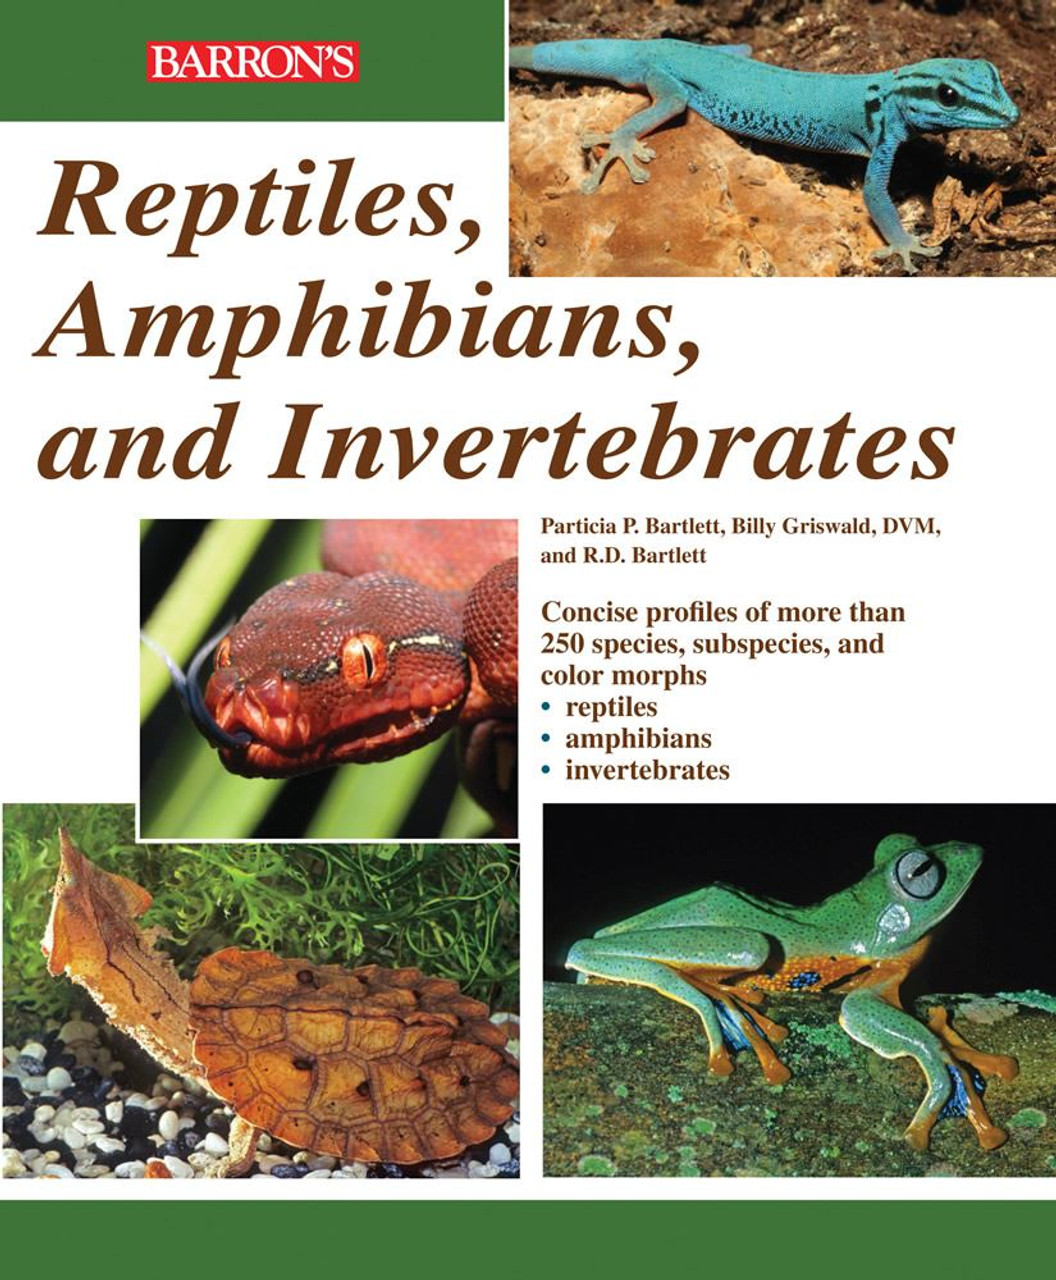 Reptiles Amphib and Invertebrates Book Image